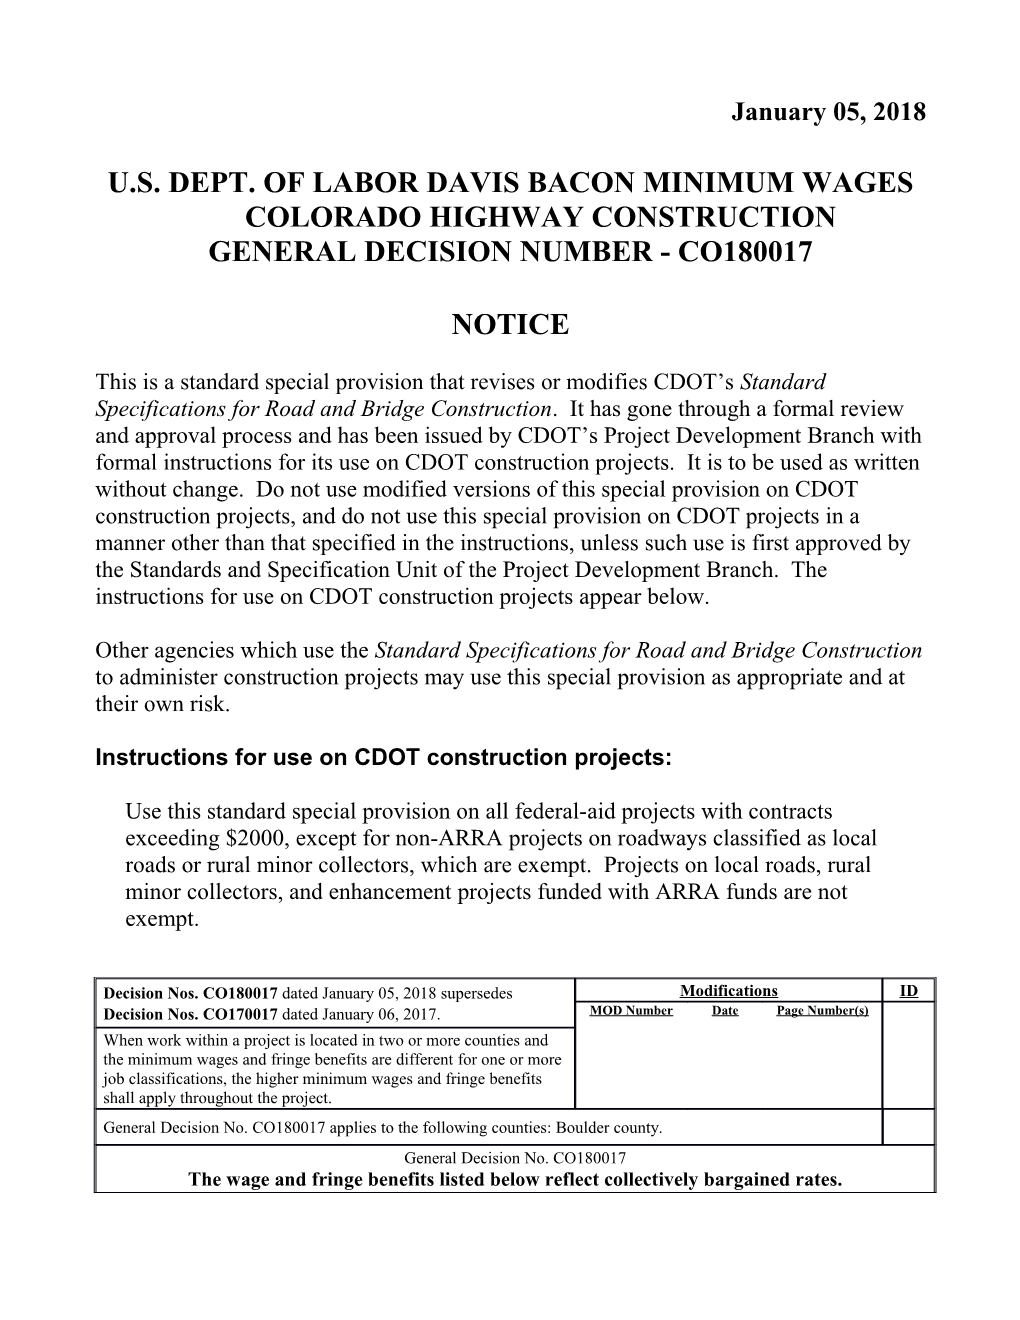 U.S. Dept. of Labor Davis Bacon Minimum Wages Colorado Highway Construction